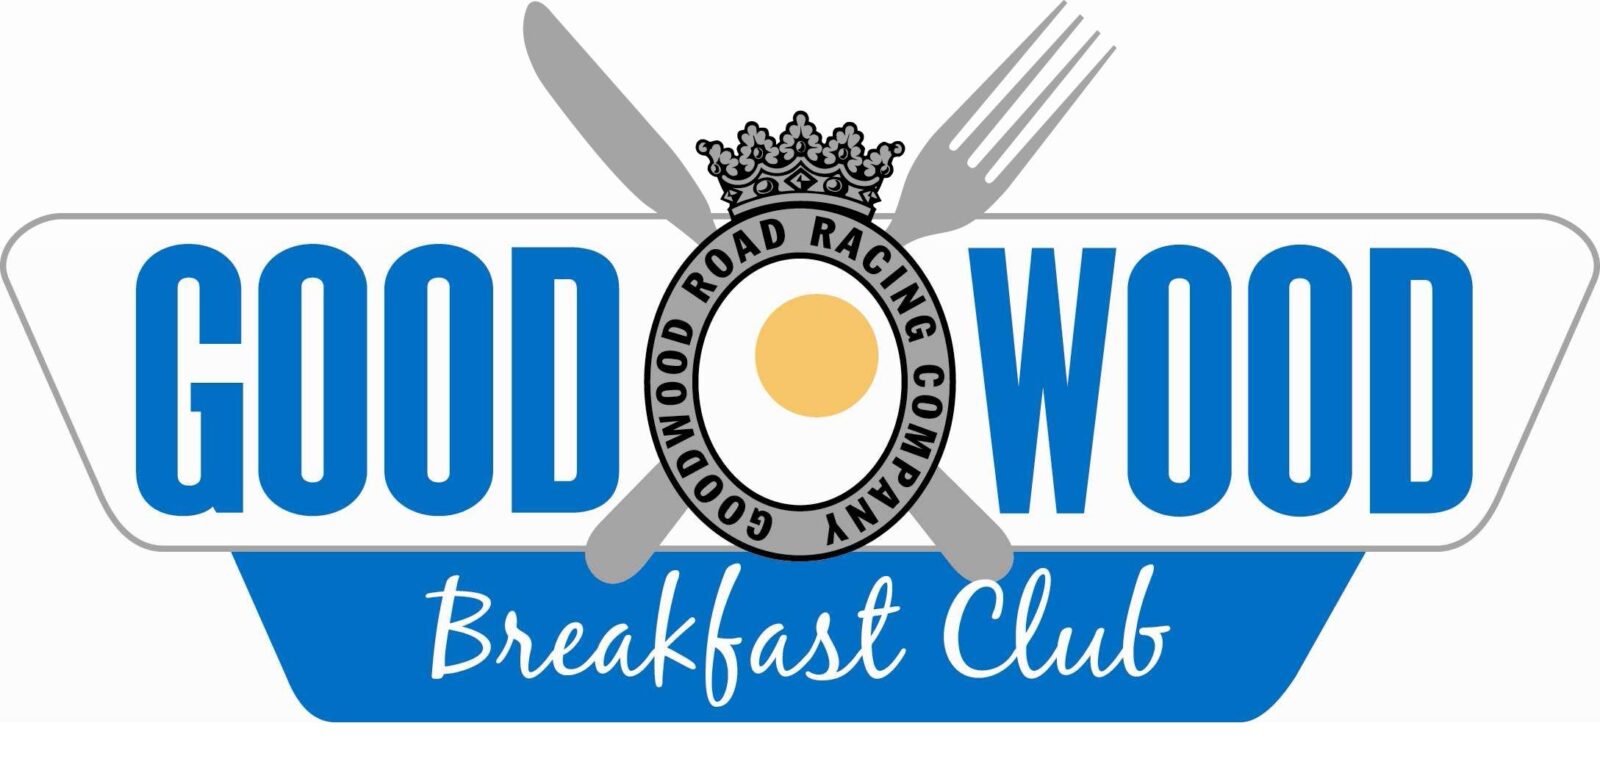 Goodwood Breakfast Club logo